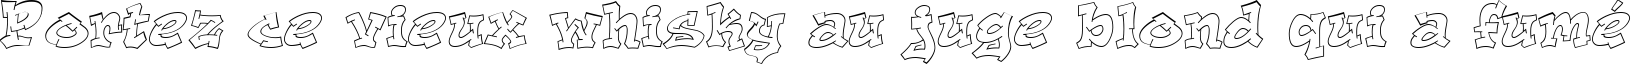 Пример написания шрифтом Aerosol текста на французском